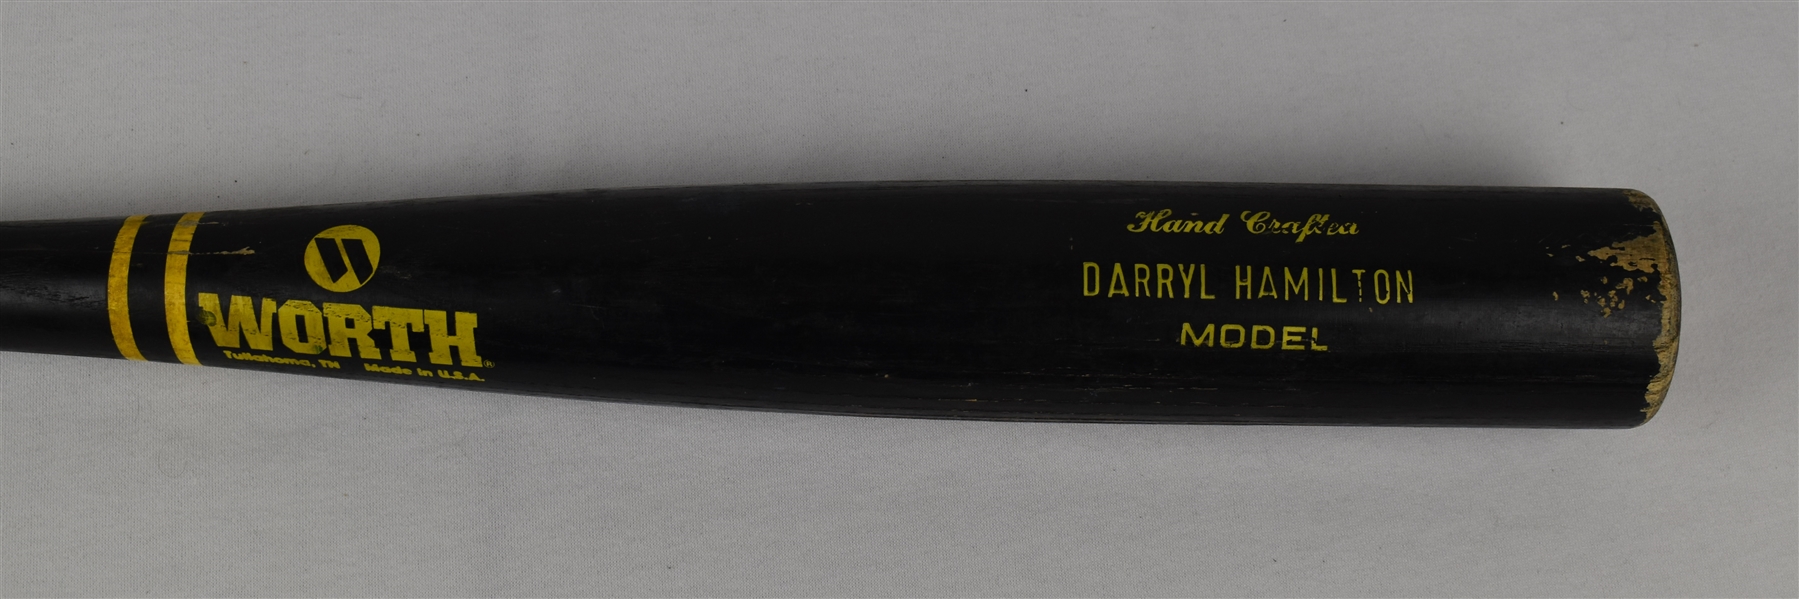 Darryl Hamilton Game Used Bat